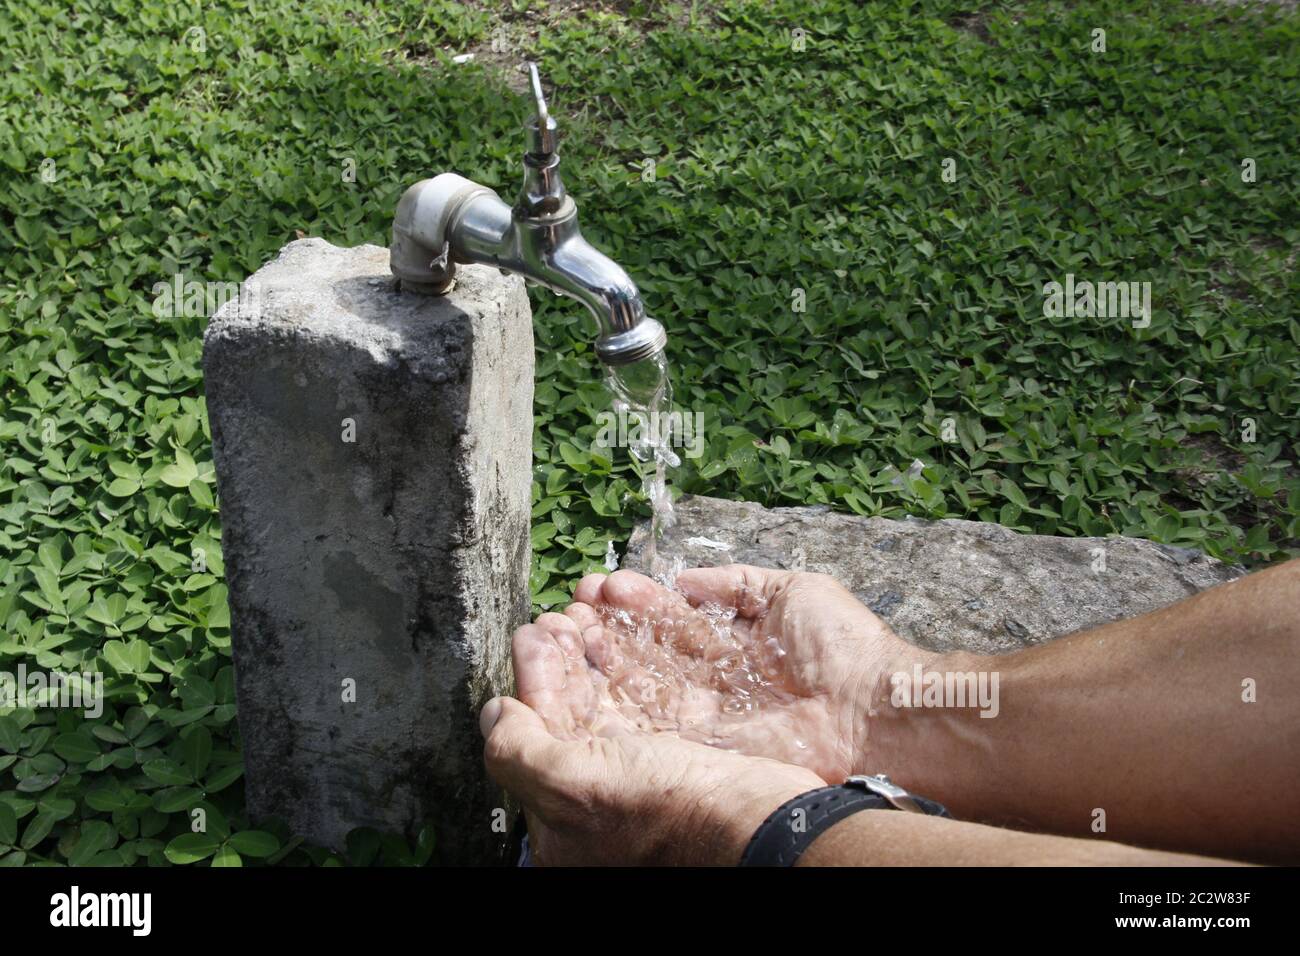 SALVADOR, BAHIA / BRASILIEN - 27. September 2013: Wasserhahn gießt die letzten Tropfen Wasser wegen mangelnder Versorgung (Joa Souza). *** Ortsunterschrift *** Stockfoto